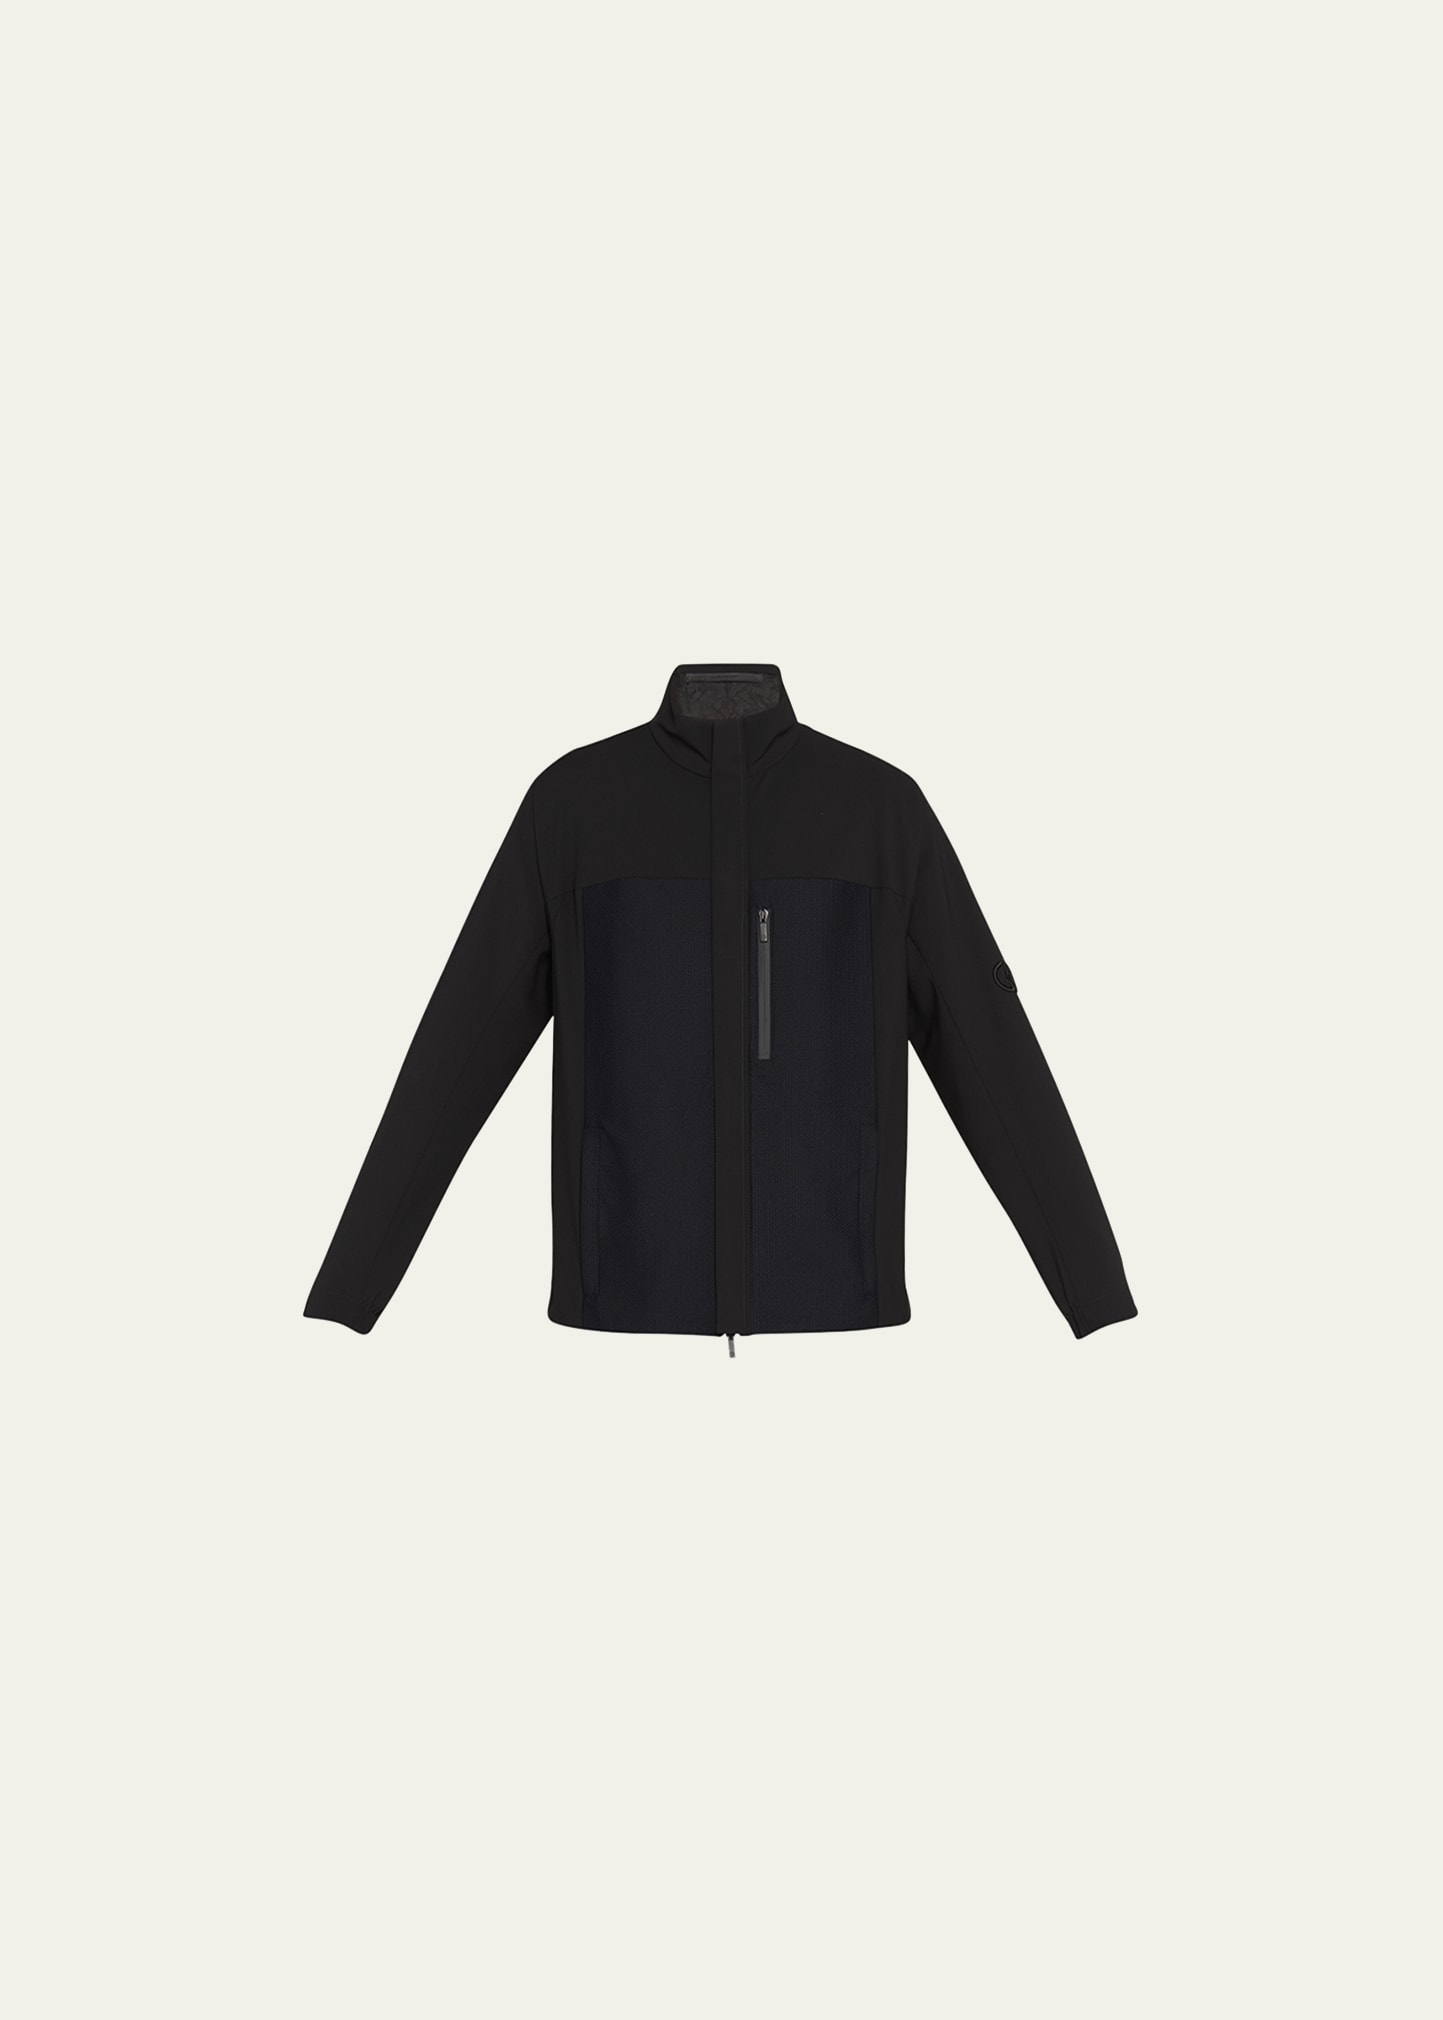 Shop Giorgio Armani Men's Mixed Media Jacket In Solid Black